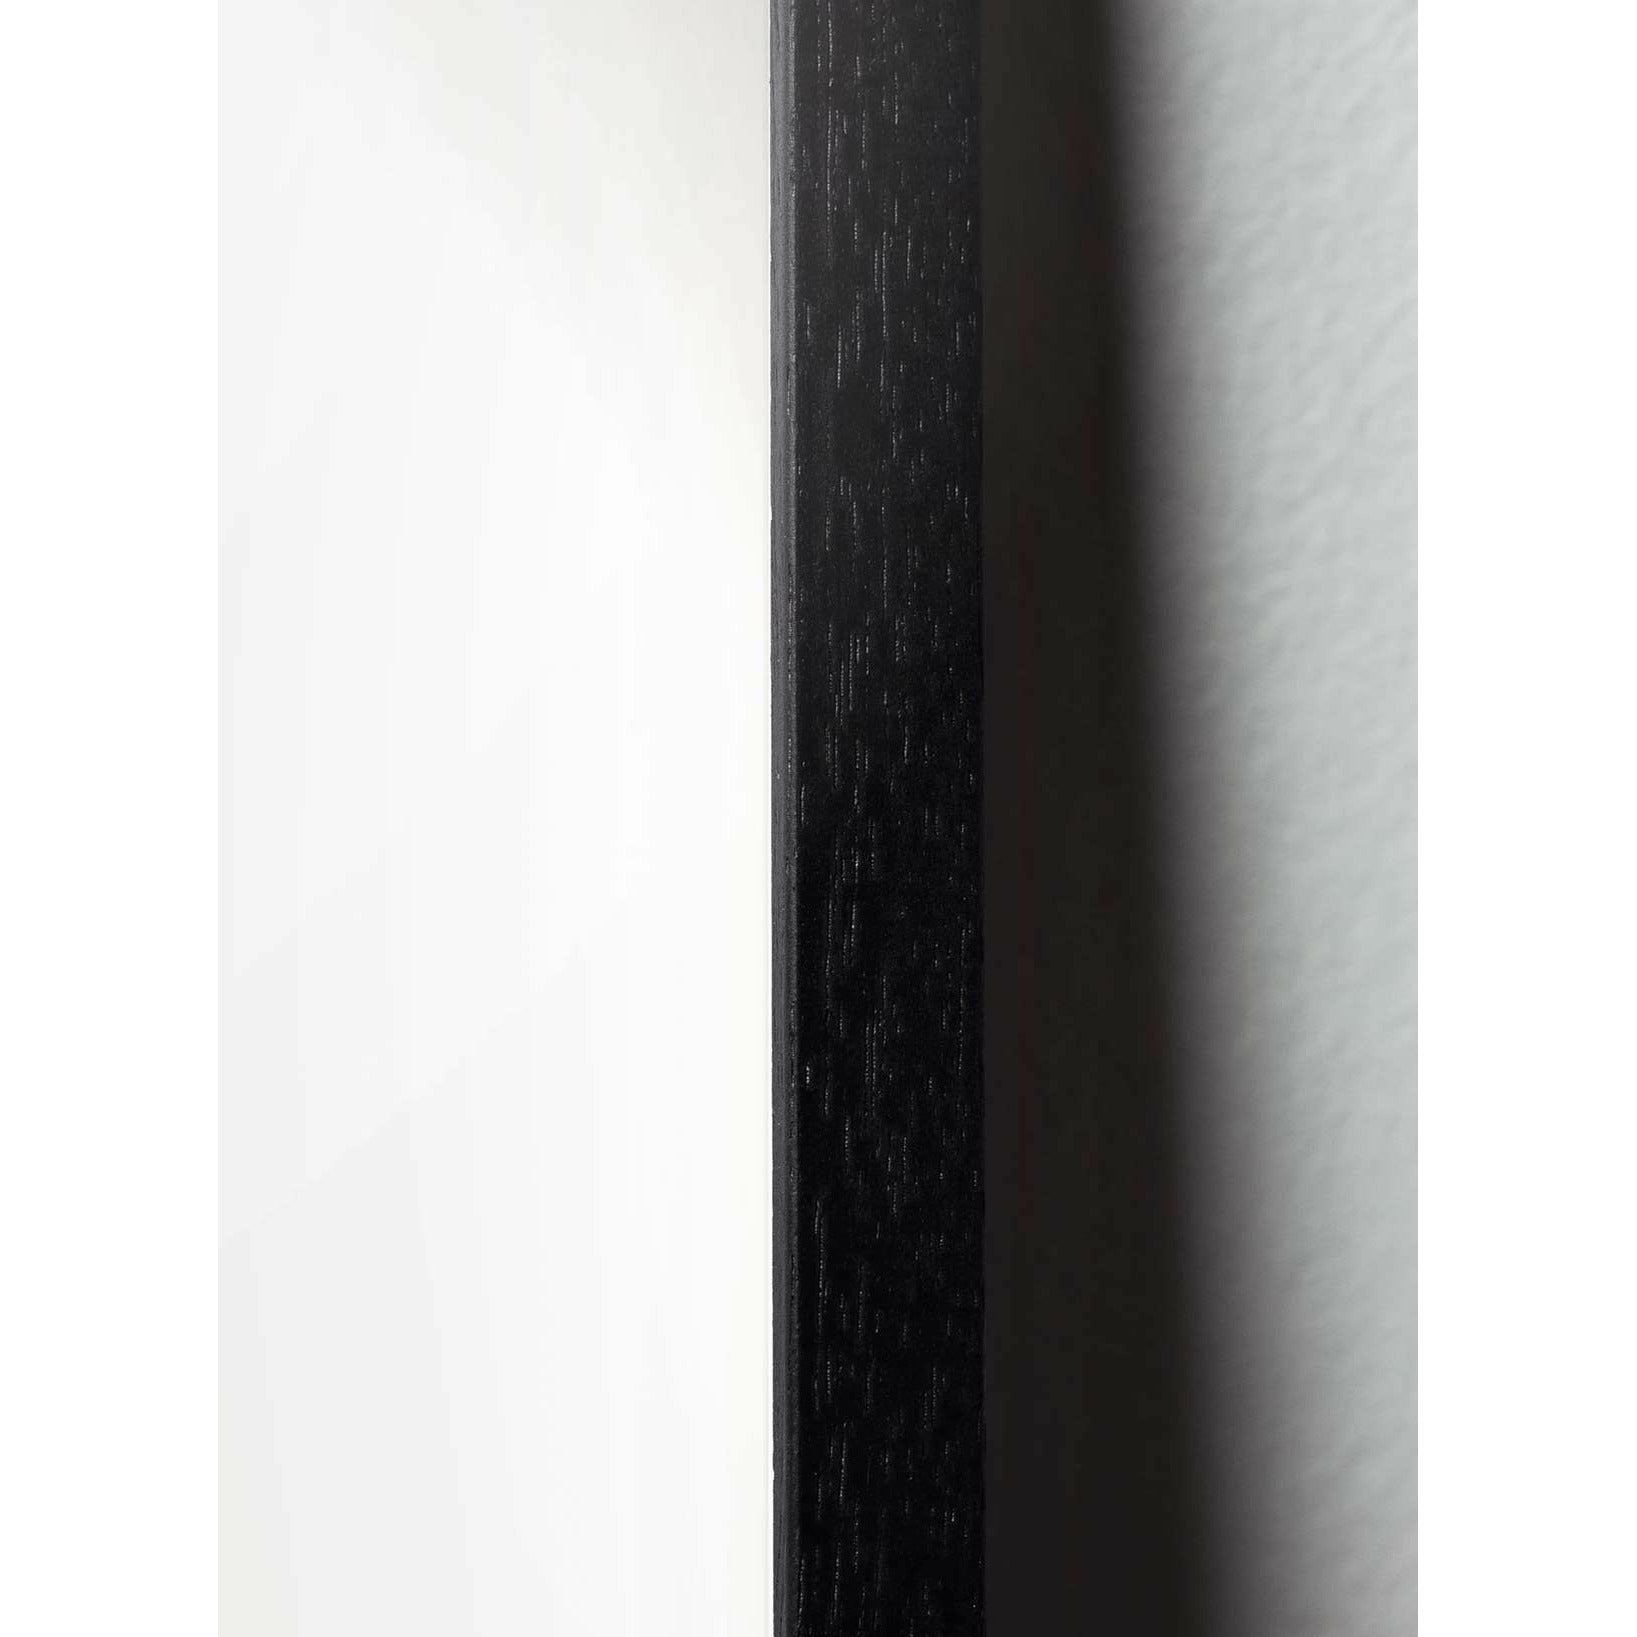 Brainchild Pine Cone Classic Poster, Frame In Black Lacquered Wood 50x70 Cm, Dark Blue Background